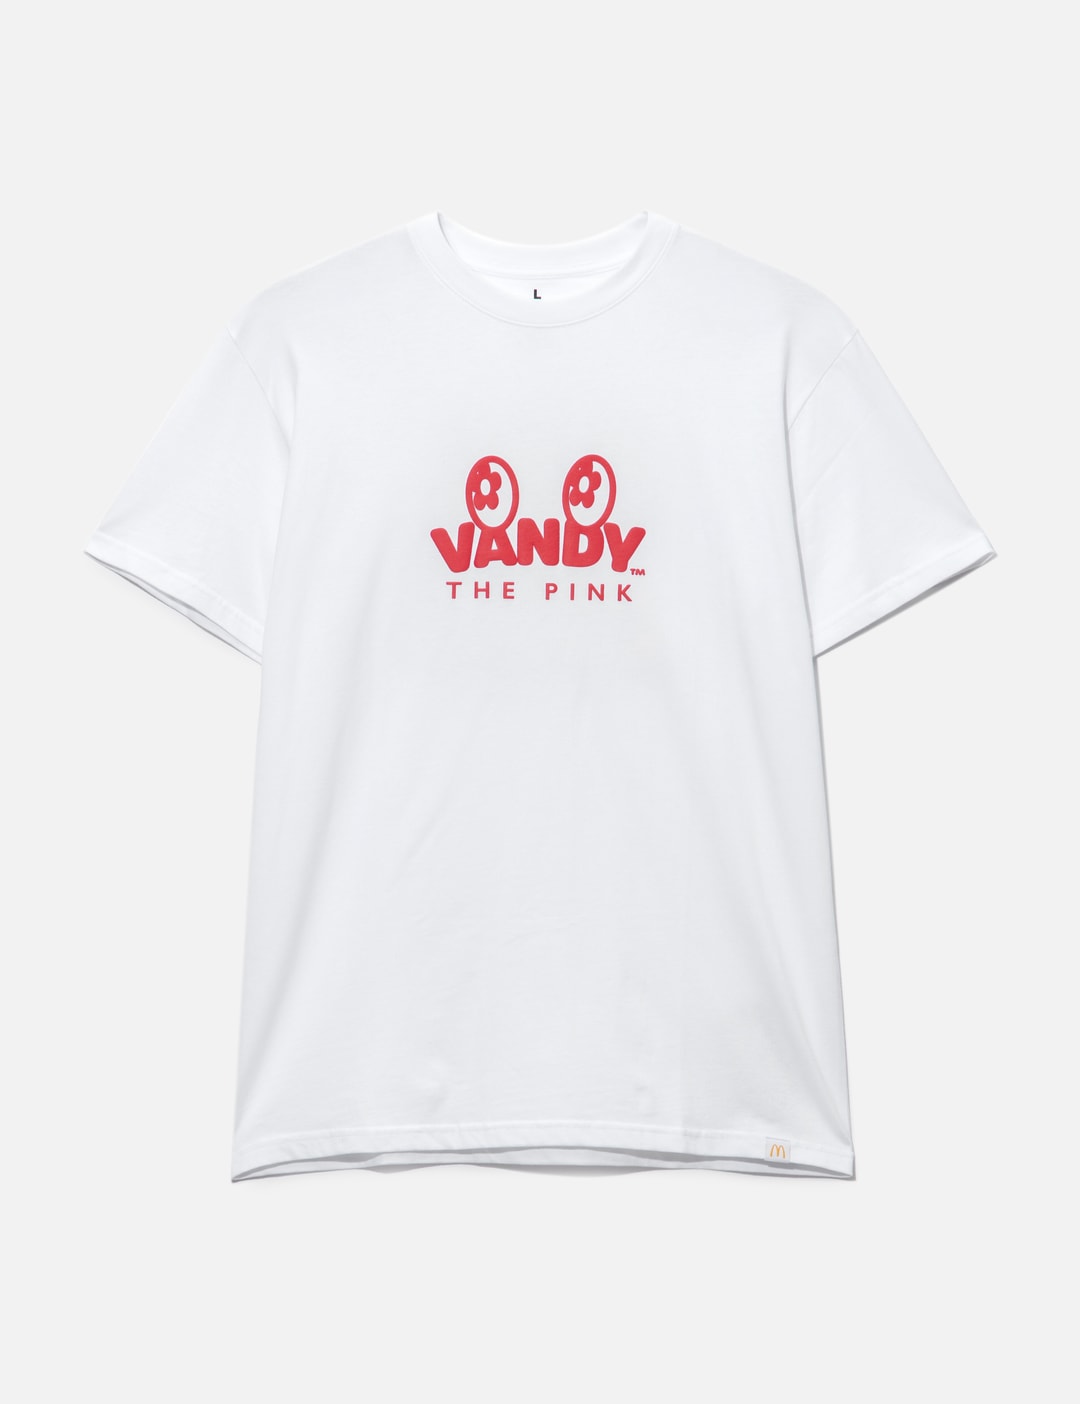 VANDYTHEPINK - Vandy The Pink Corporation Trademark Registration